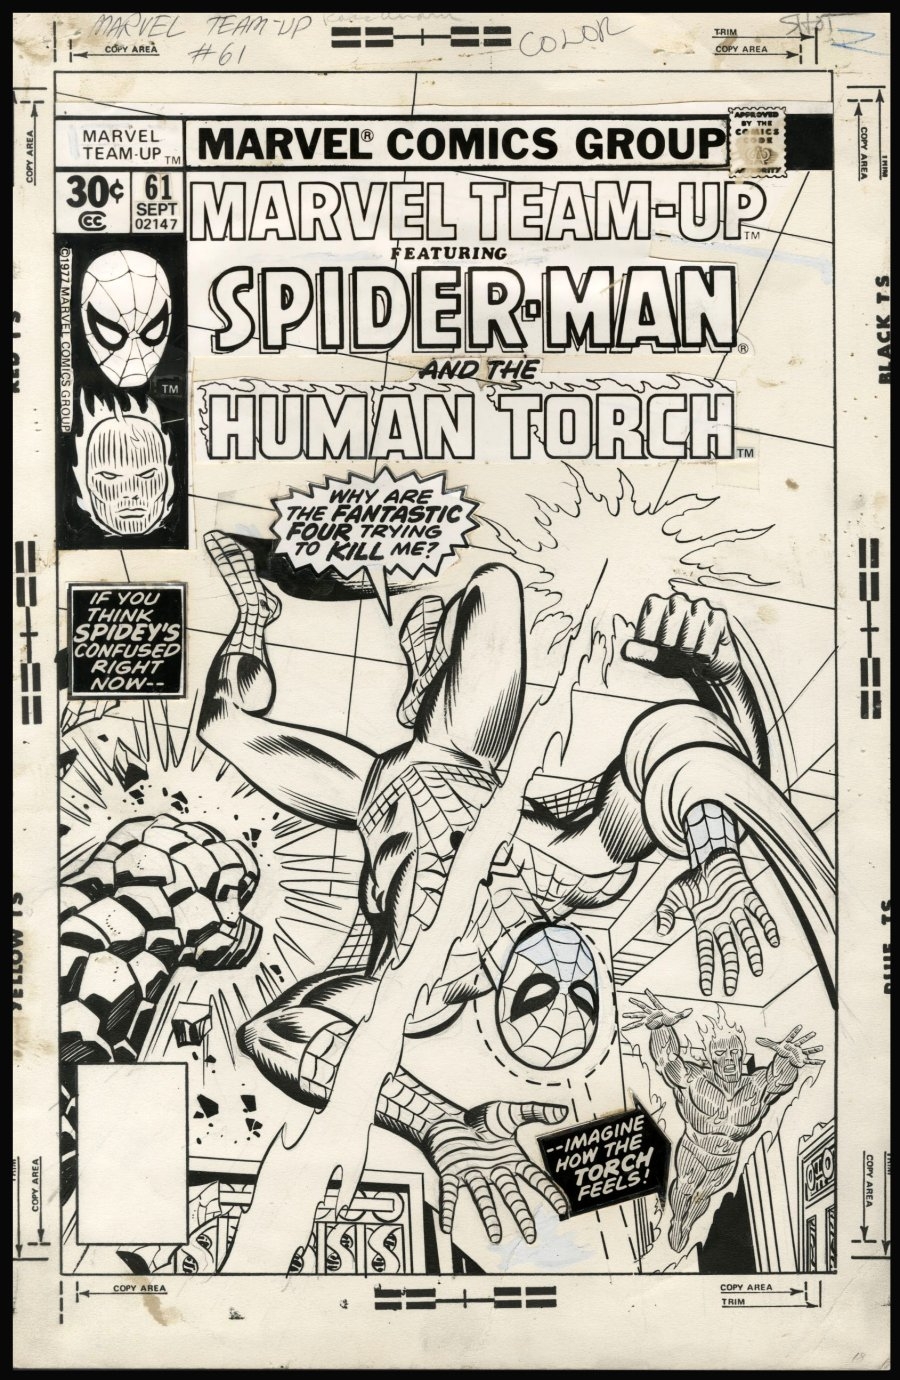 Al Milgrom - Marvel Team-Up #61 cover - Spider-Man & The Human Torch! Comic Art